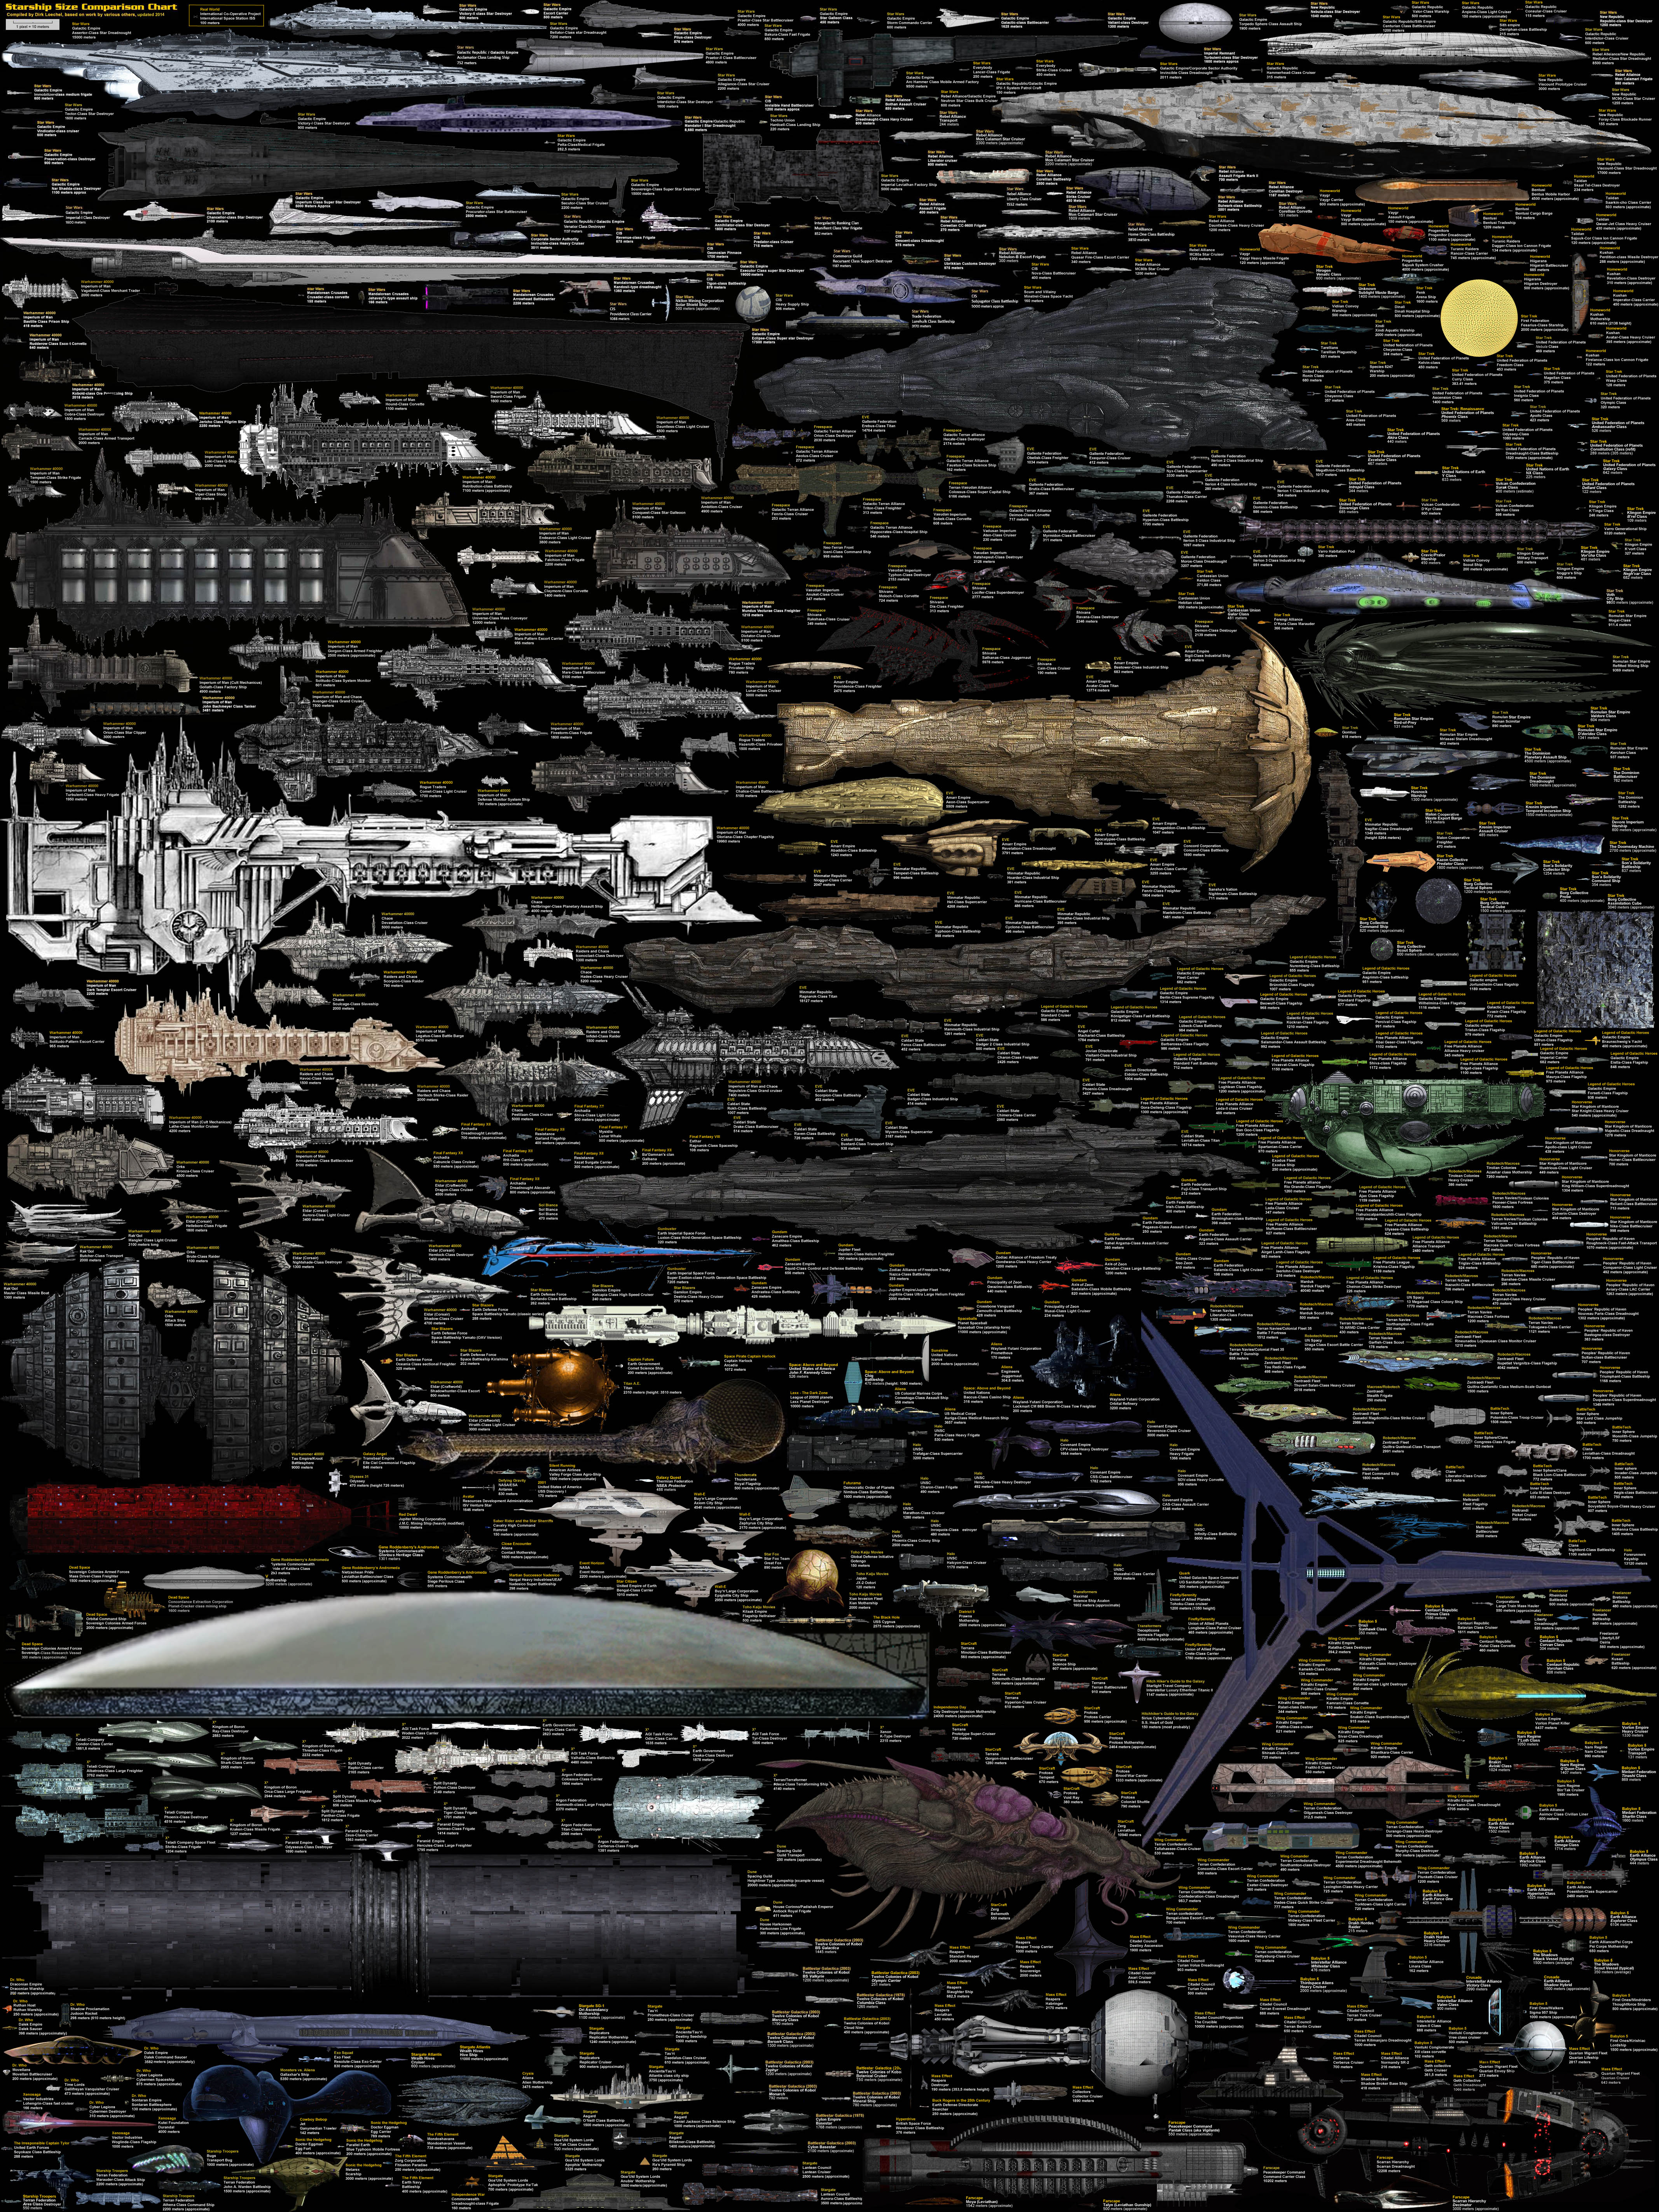 http://orig03.deviantart.net/494a/f/2014/171/0/1/size_comparison___science_fiction_spaceships_by_dirkloechel-d6lfgdf.jpg